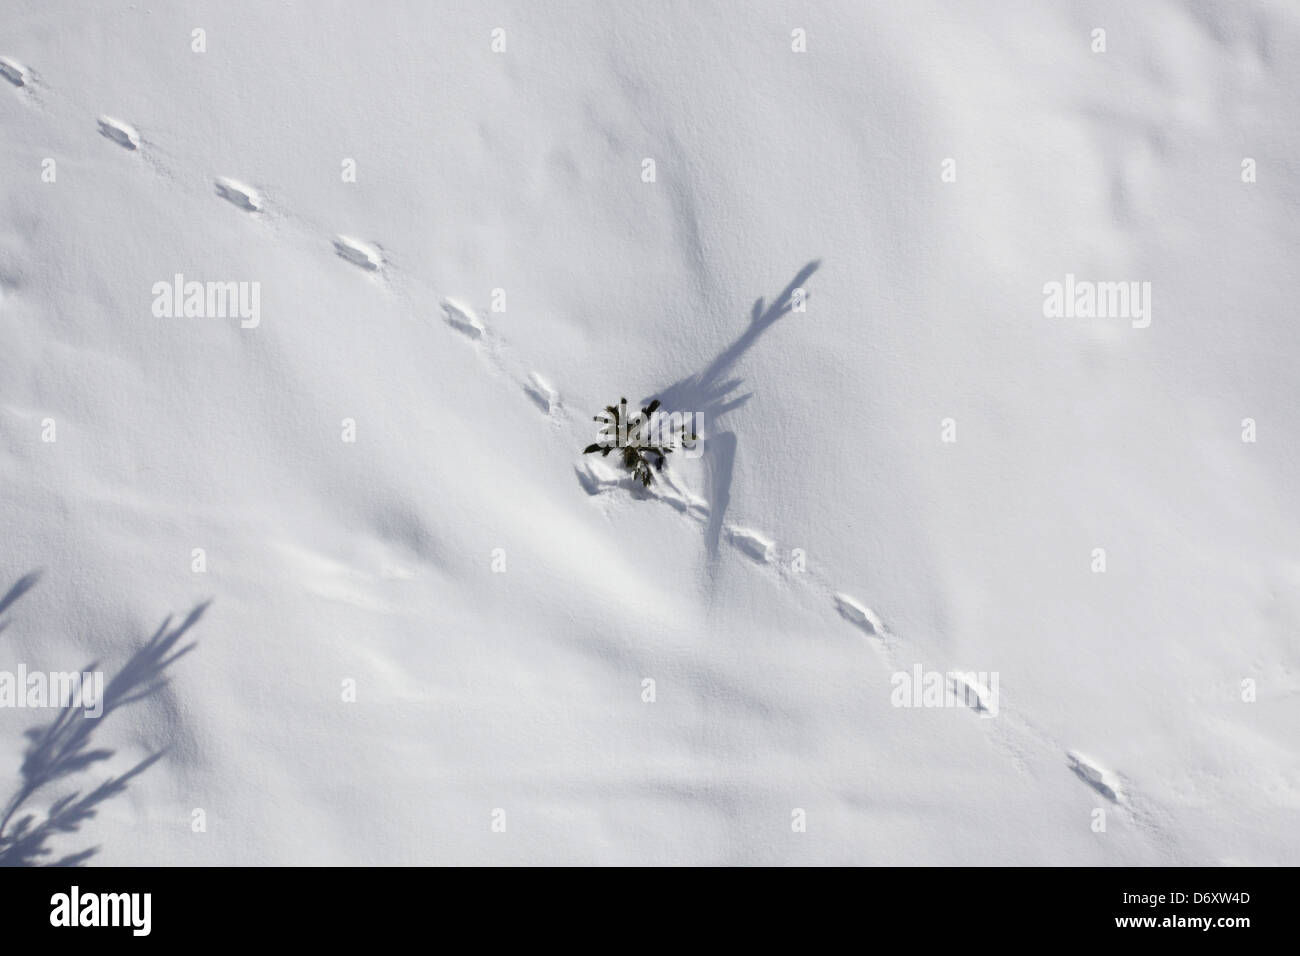 Empreintes dans la neige. Ski à Meribel, France Banque D'Images